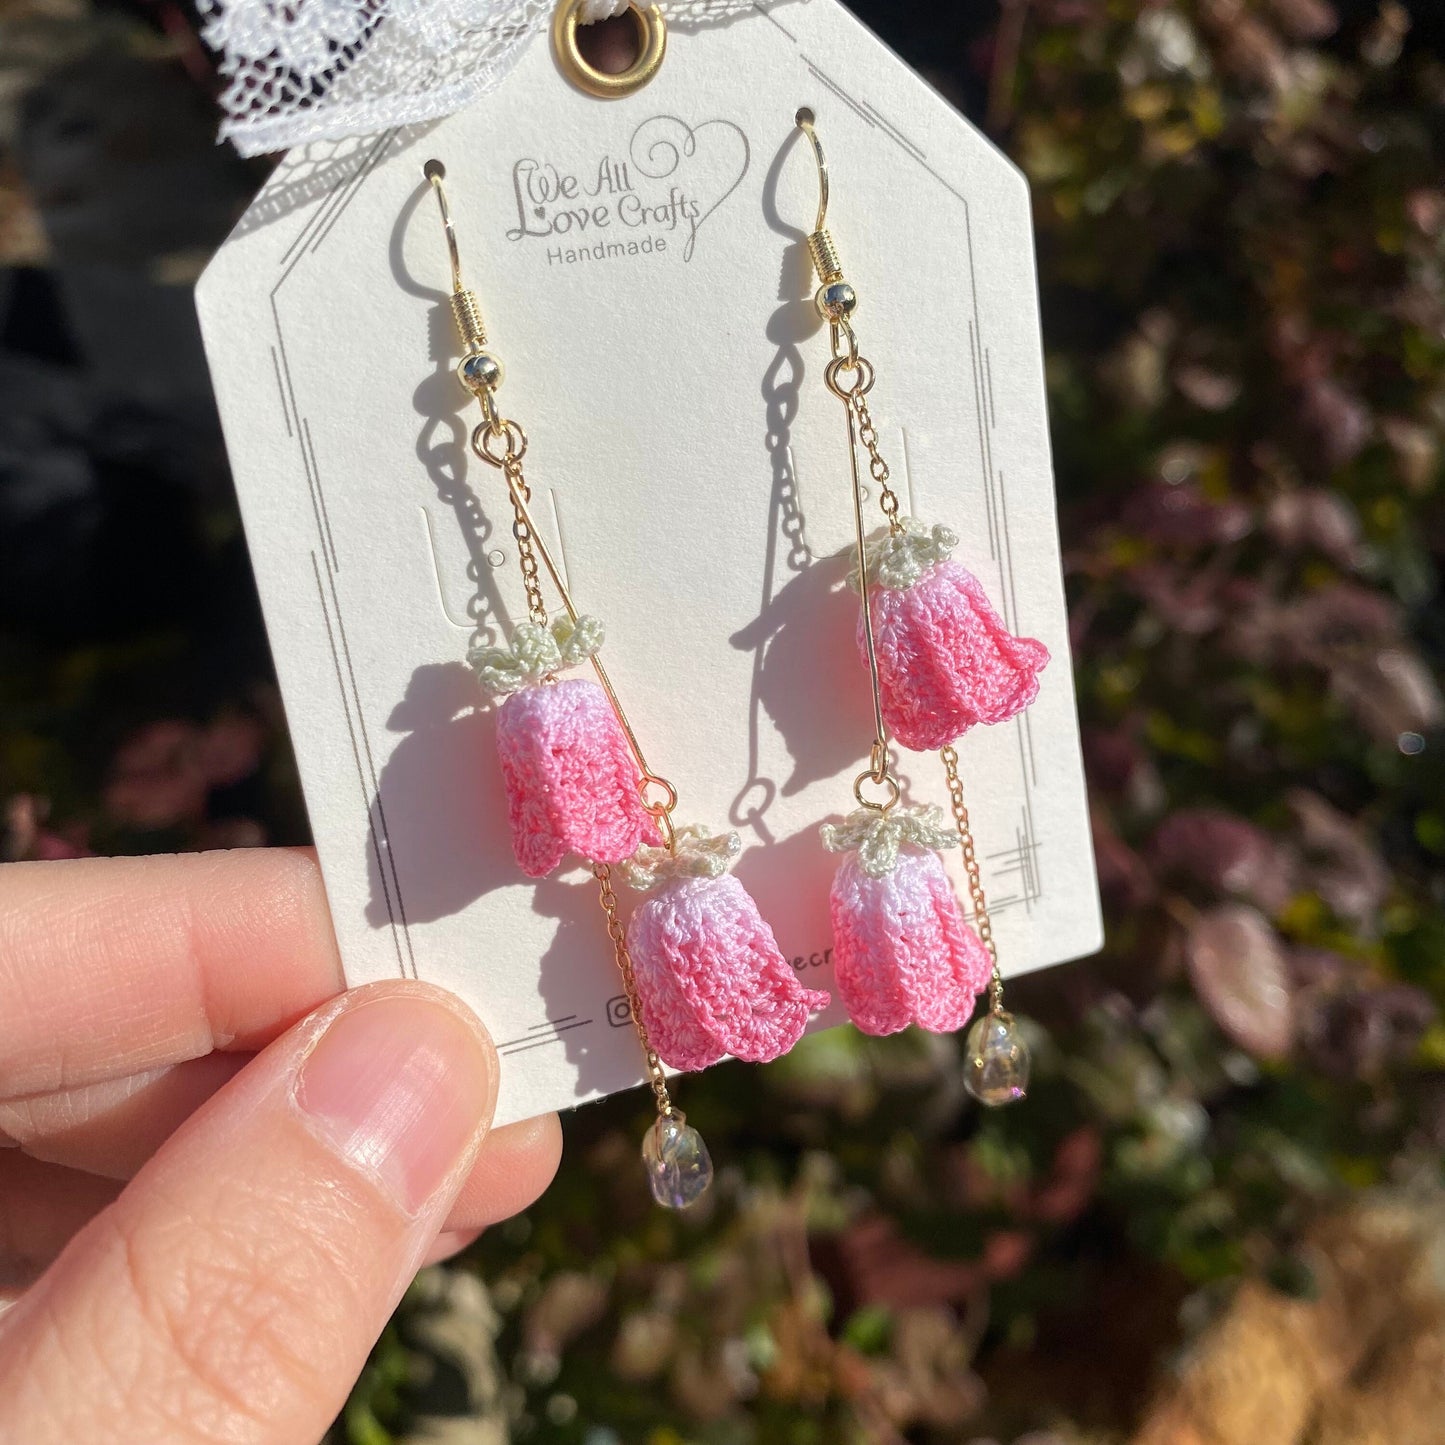 Pink bell shaped clematis flower ring crochet dangle earrings/Microcrochet/14k gold plated/gift for her/Knitting handmade jewelry